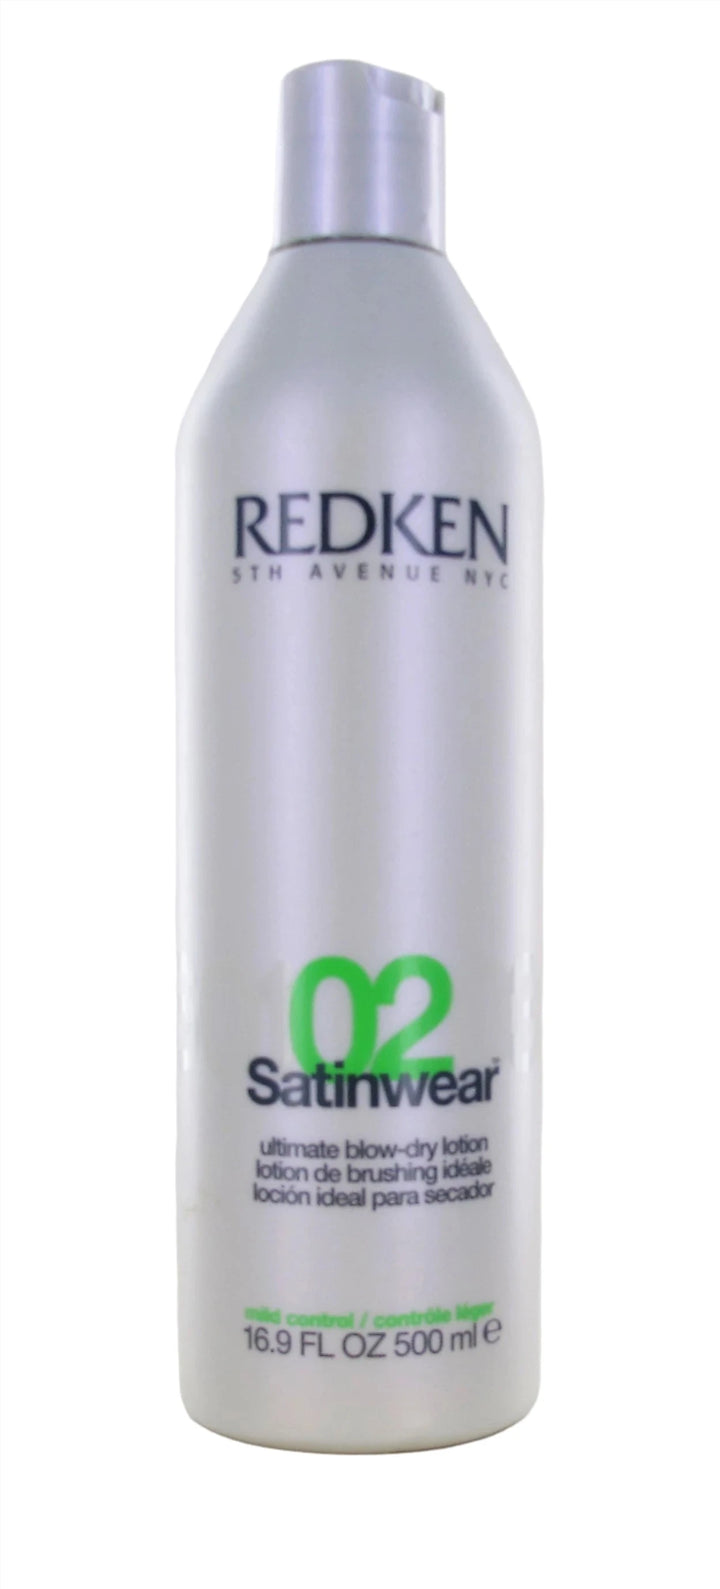 Redken Satinwear Number 02 Ultimate Blow-Dry Lotion